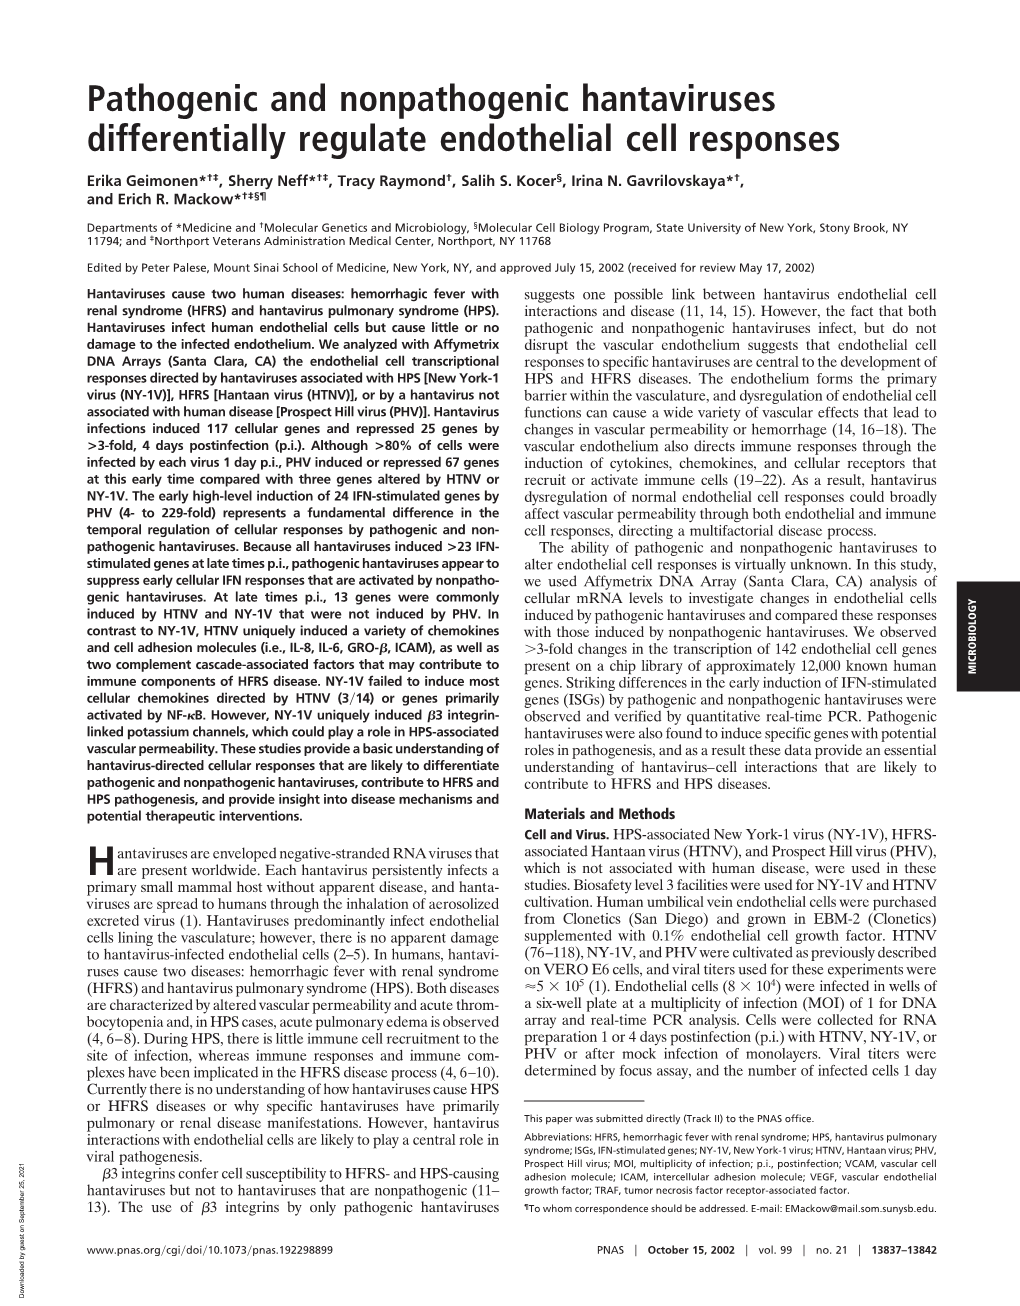 Pathogenic and Nonpathogenic Hantaviruses Differentially Regulate Endothelial Cell Responses